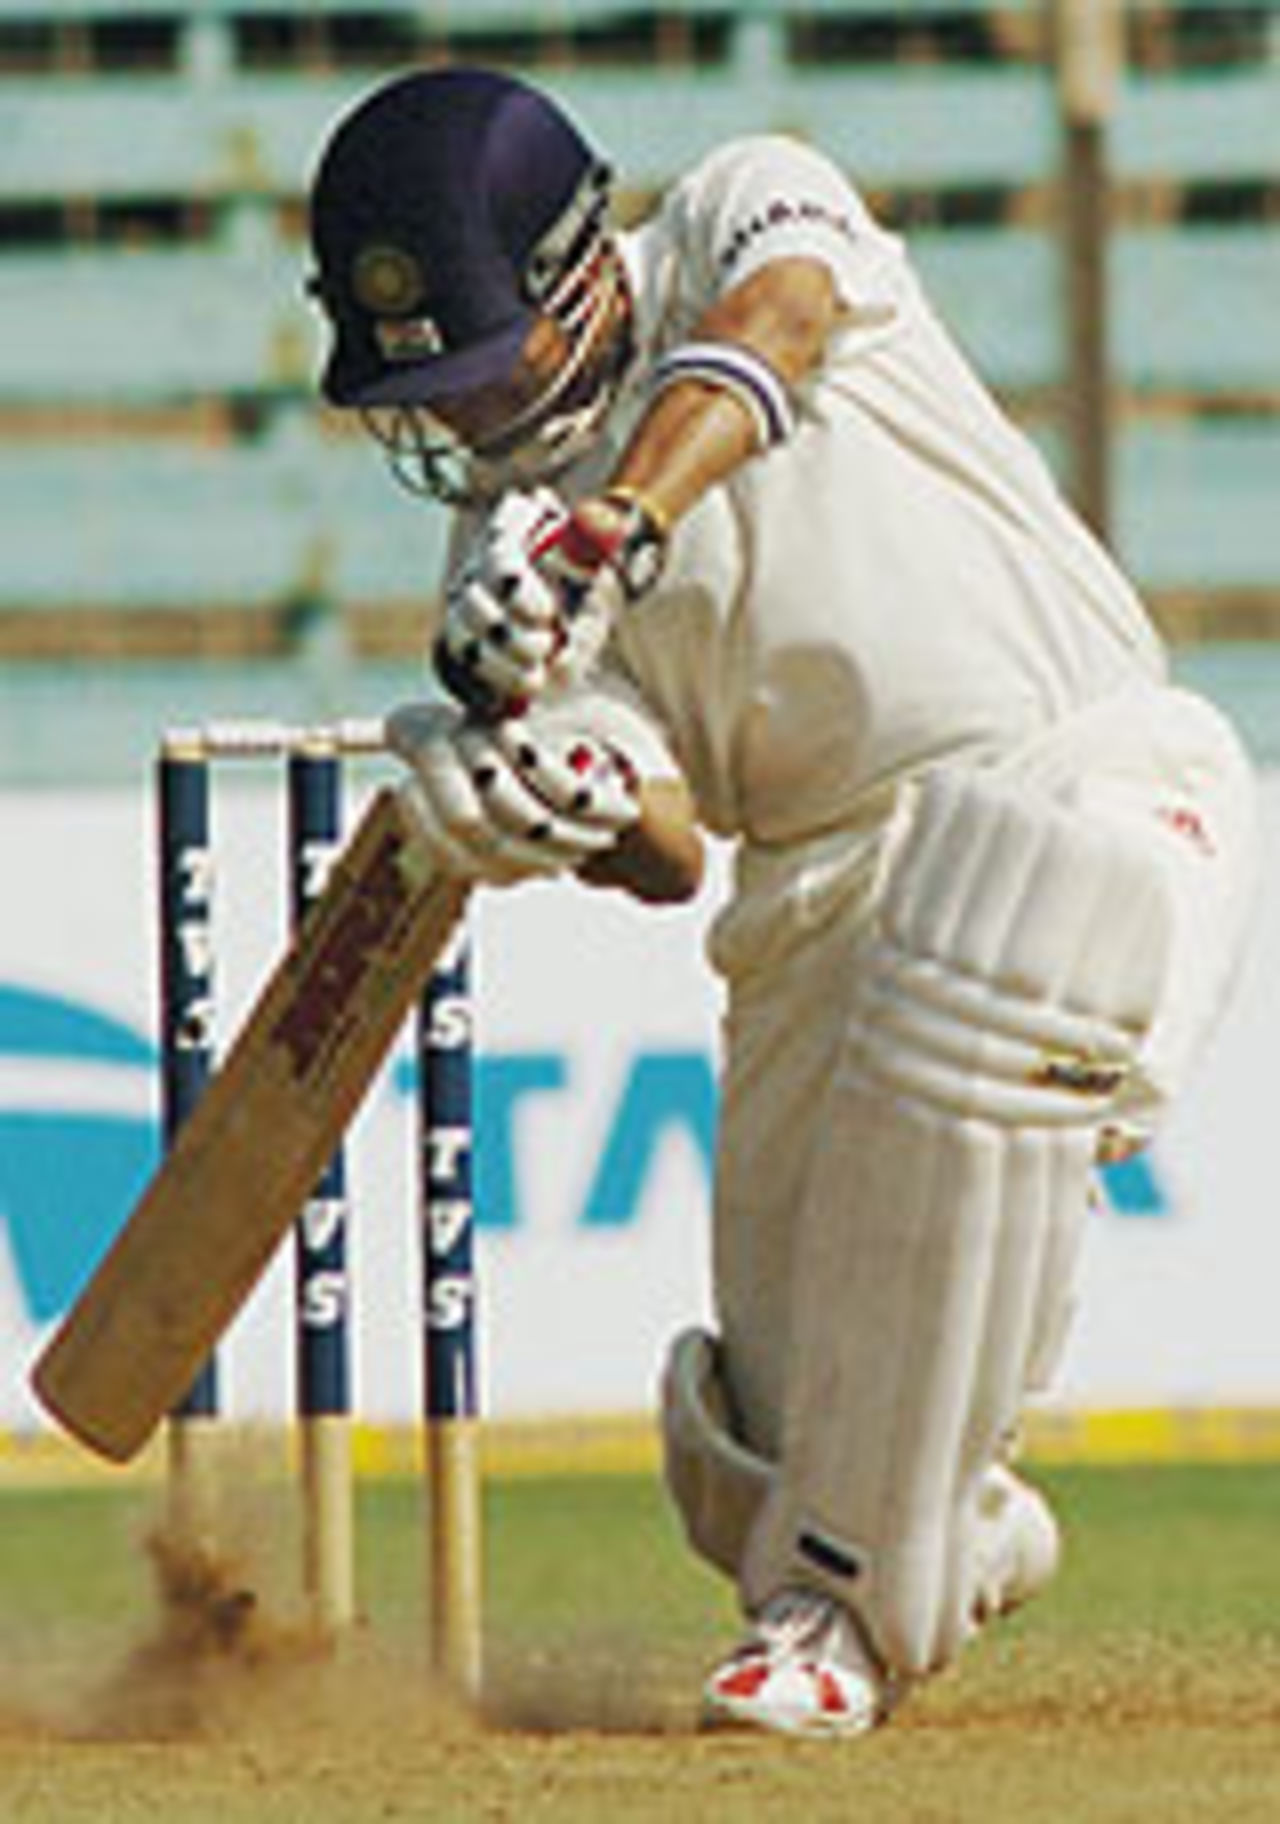 Sachin Tendulkar in action, India v Australia, 4th Test, Mumbai, 3rd day, November 5, 2004